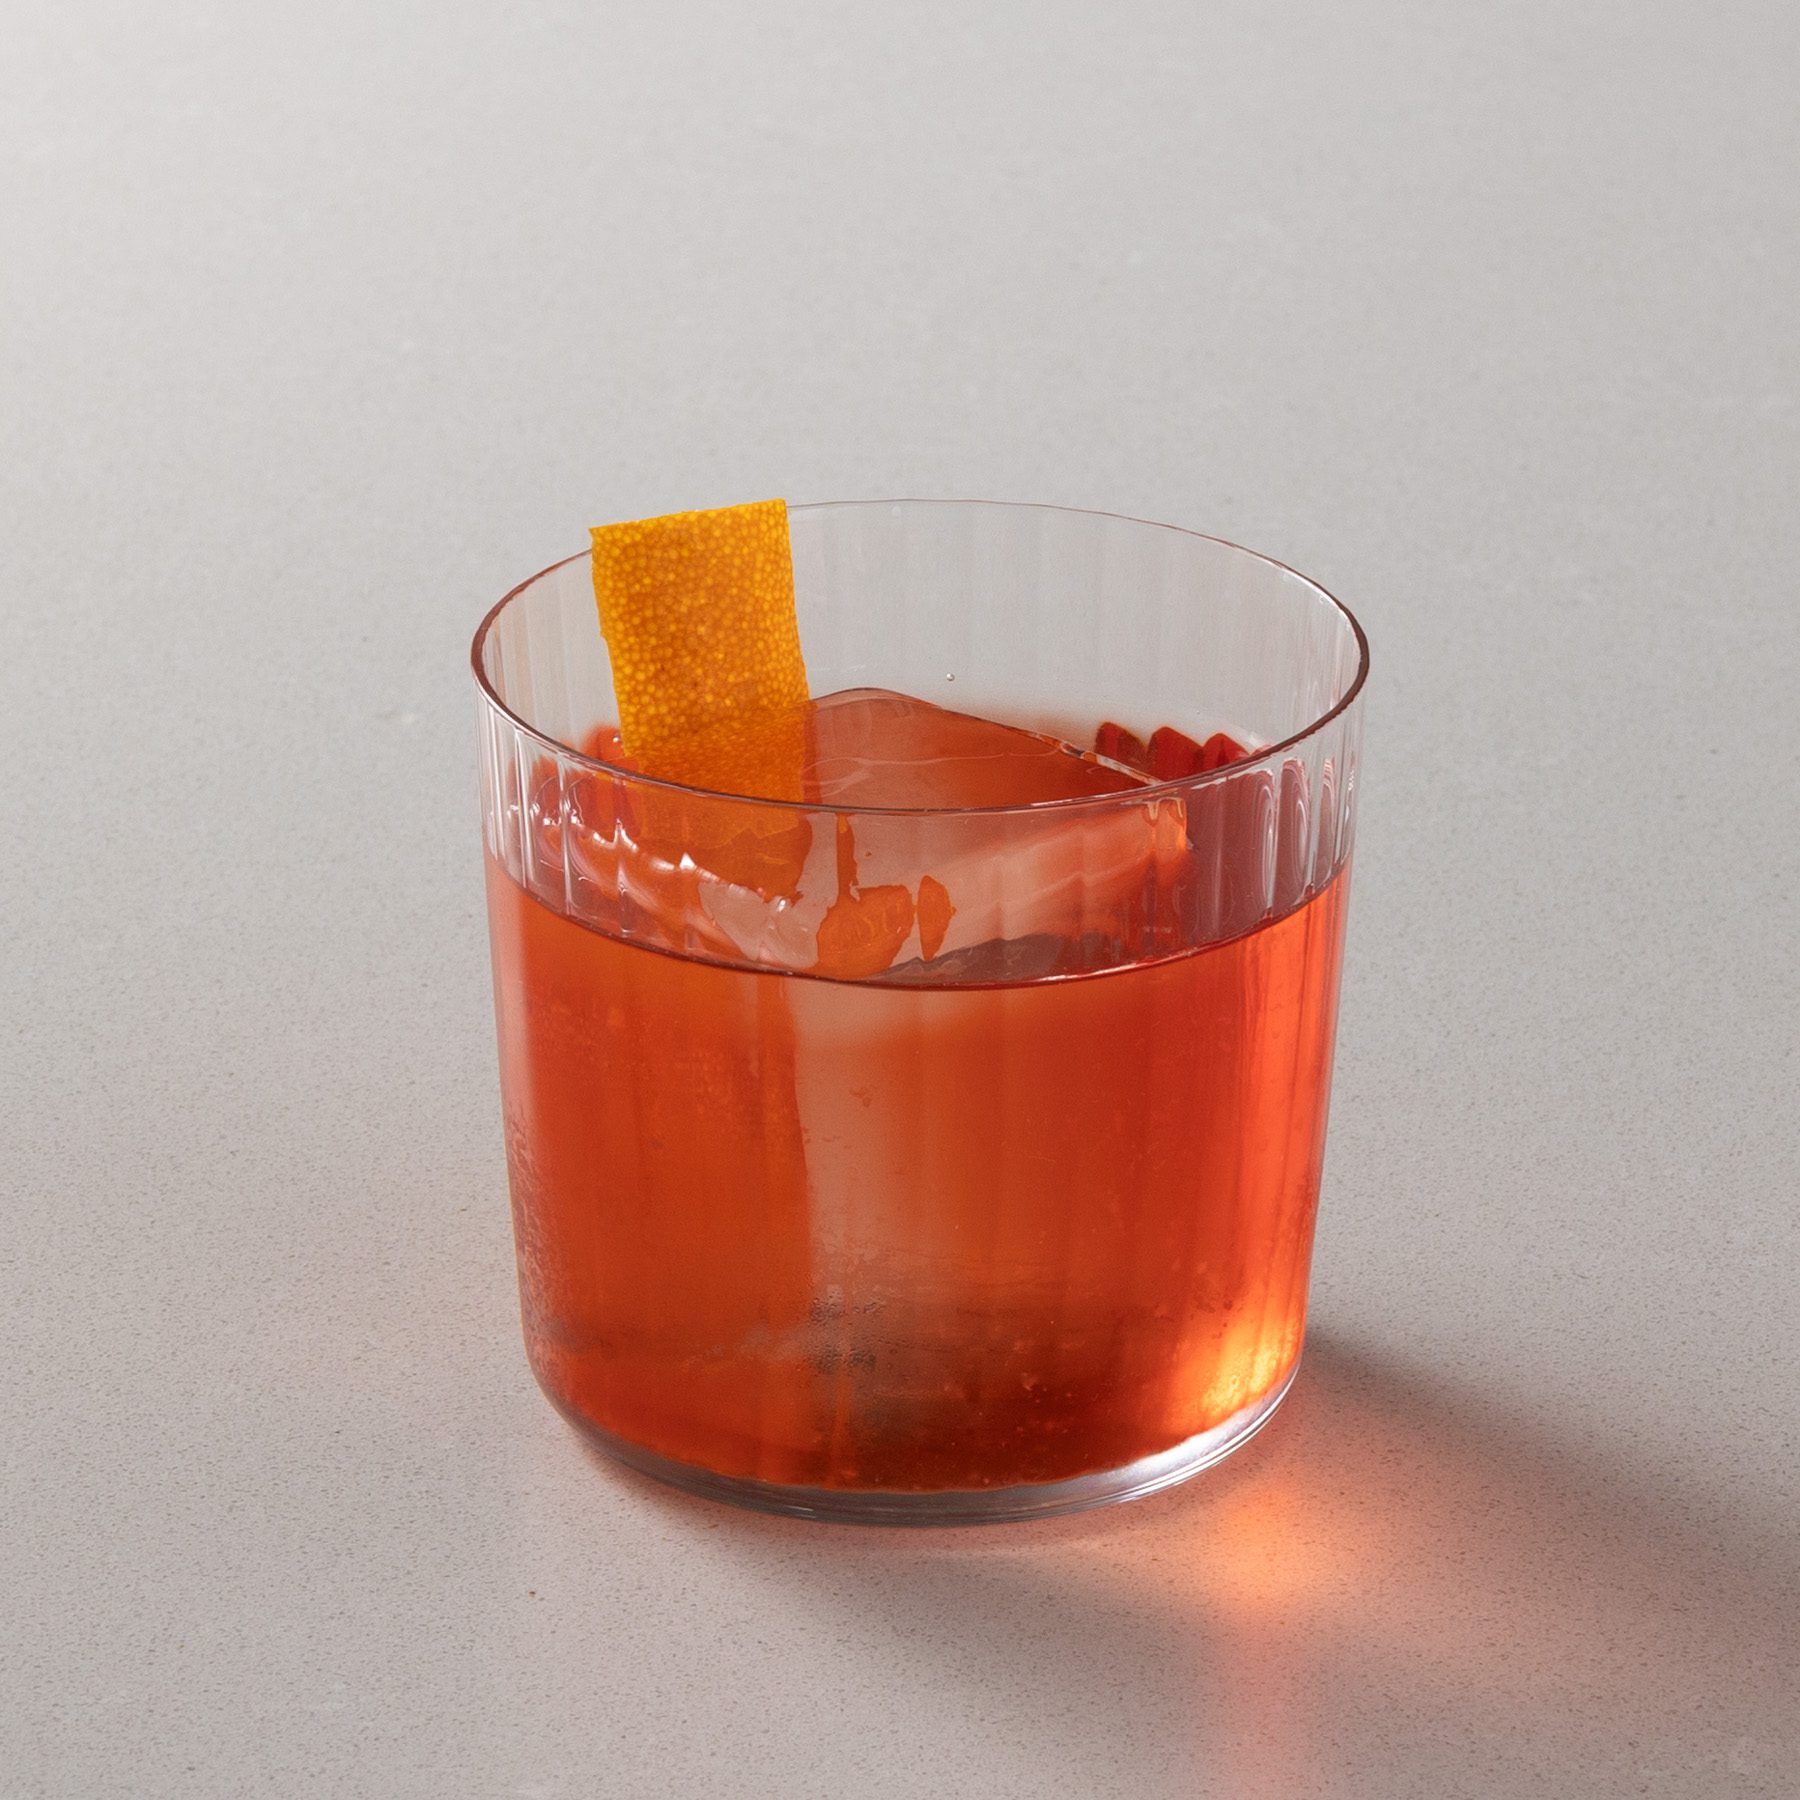 Cardinale cocktail